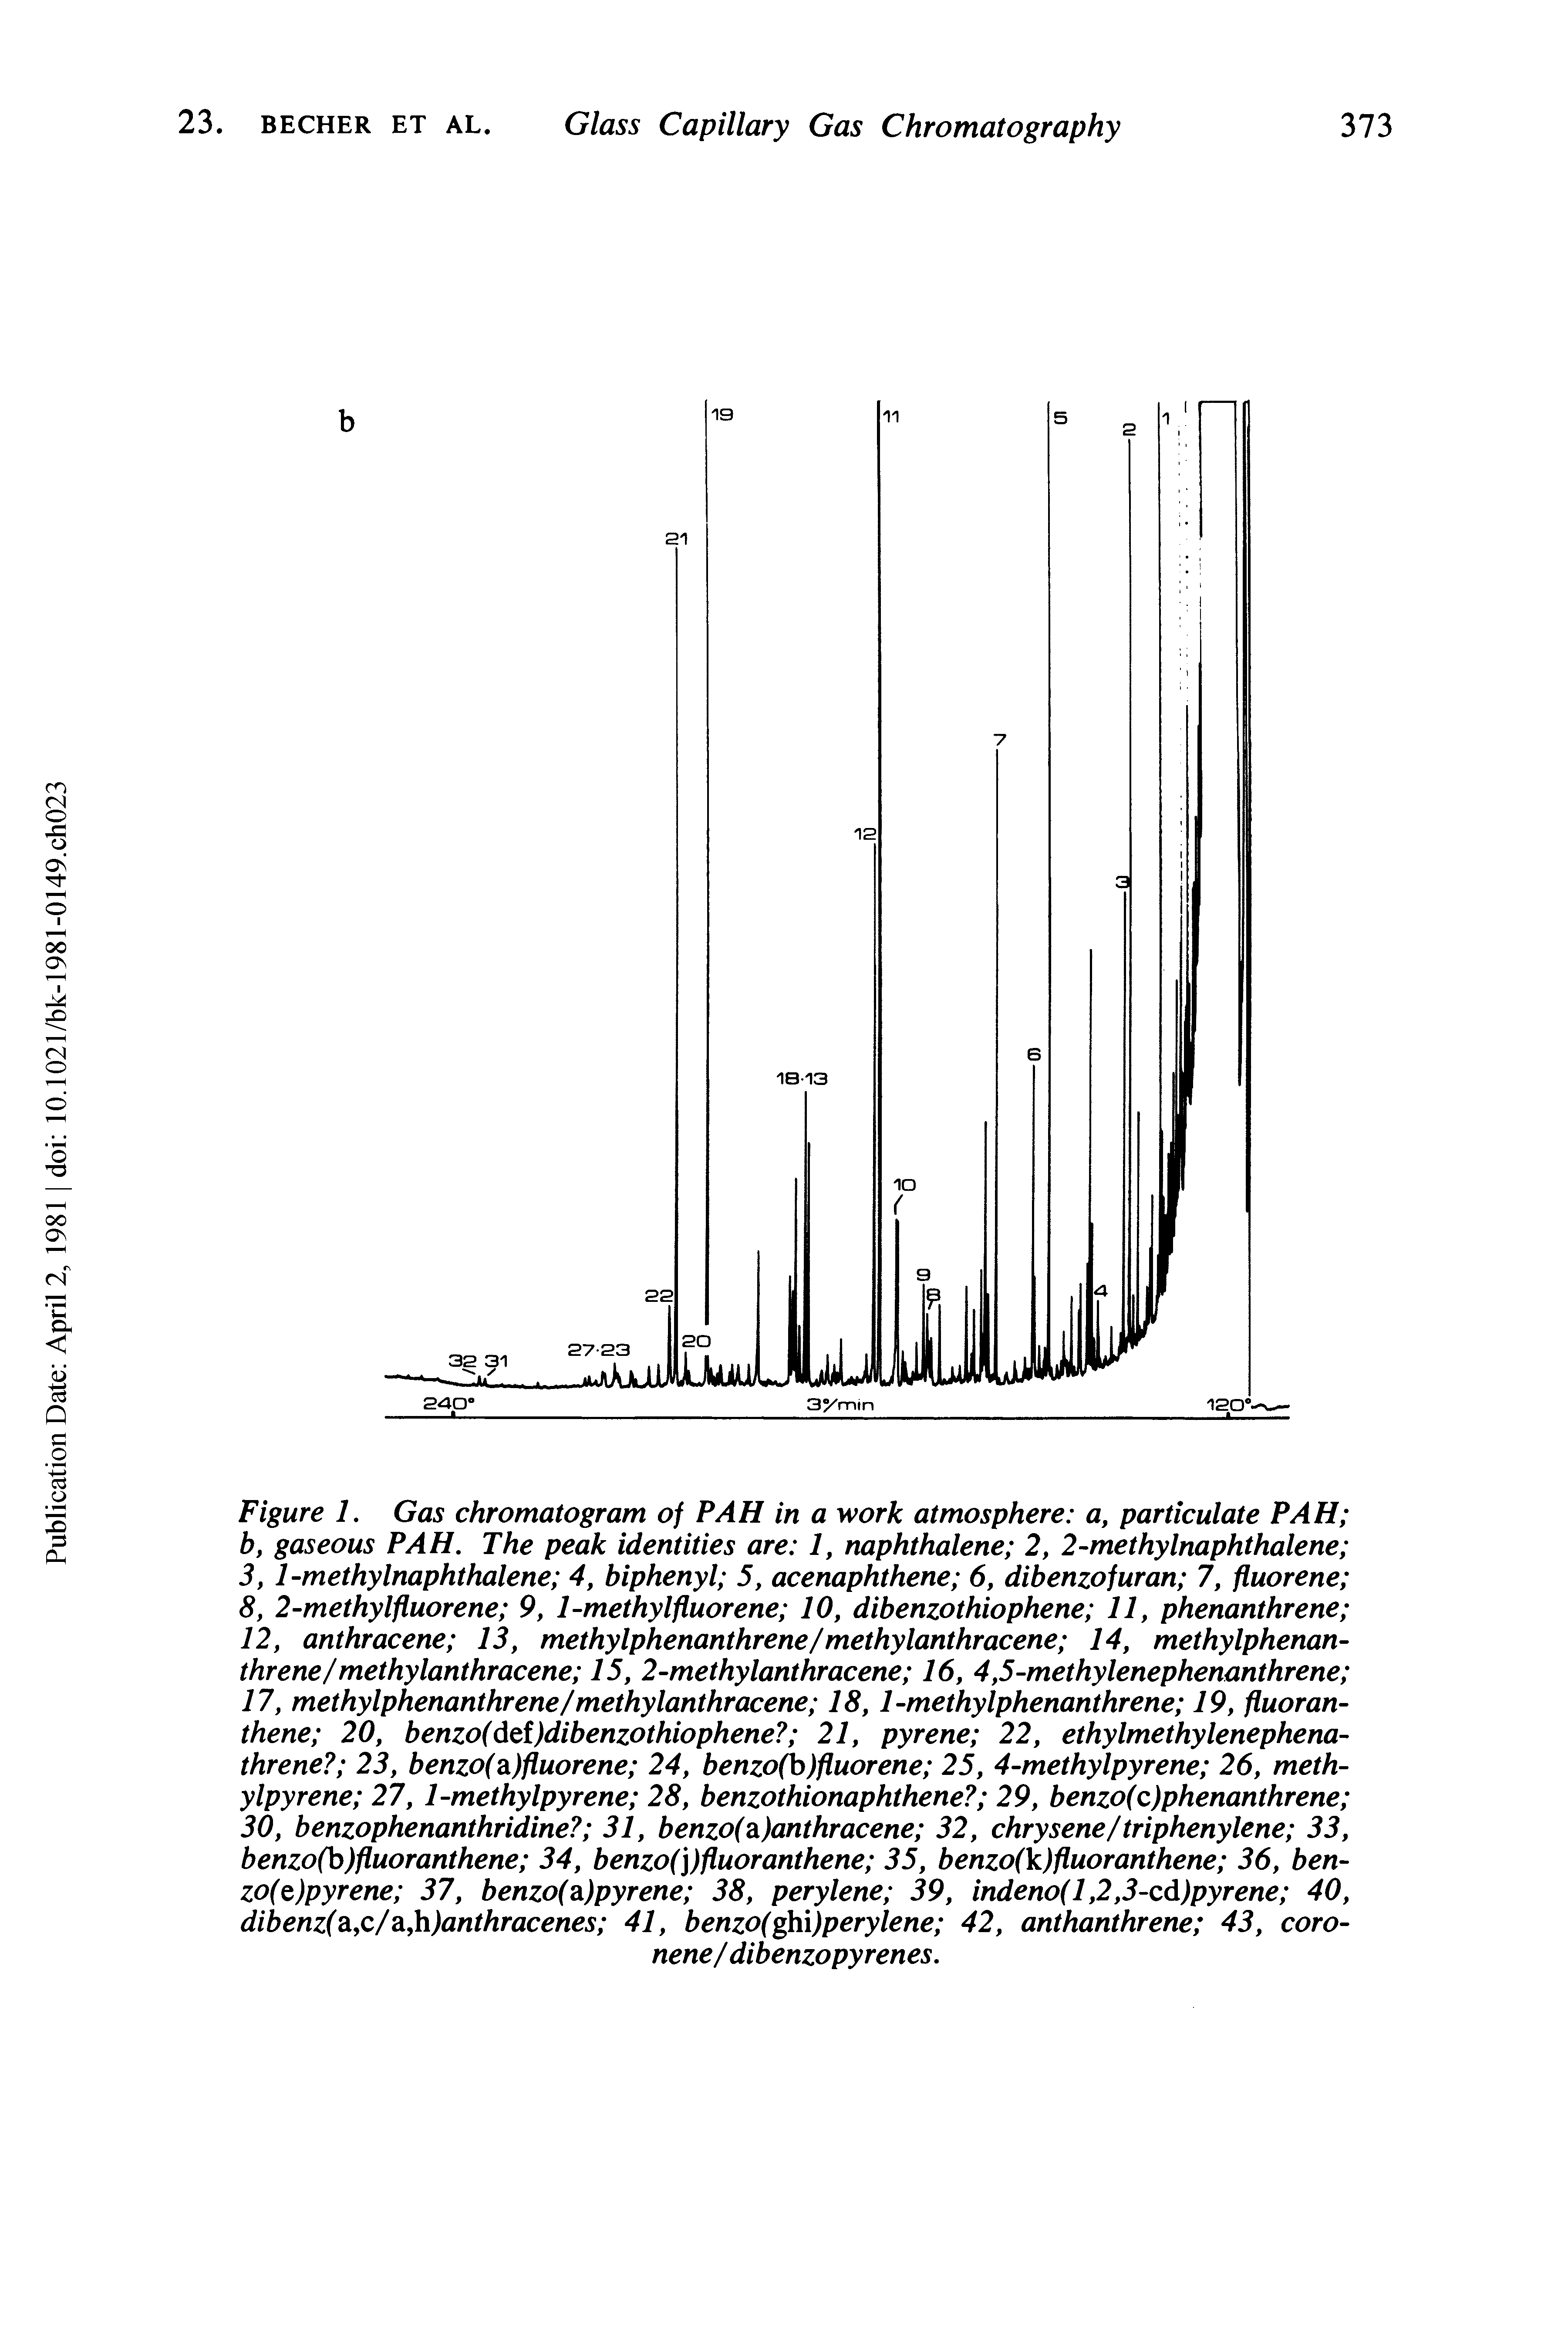 Figure 1. Gas chromatogram of PAH in a work atmosphere a, particulate PAH b, gaseous PAH. The peak identities are 1, naphthalene 2, 2-methylnaphthalene 3, 1 -methylnaphthalene 4, biphenyl 5, acenaphthene 6, dibenzofuran 7, fluorene 8, 2-methylfluorene 9, 1-methylfluorene 10, dibenzothiophene 11, phenanthrene 12, anthracene 13, methylphenanthrene/methylanthracene 14, methylphenan-threne/methylanthracene 15, 2-methylanthracene 16, 4,5-methylenephenanthrene 17, methylphenanthrene/methylanthracene 18,1-methylphenanthrene 19, fluoranthene 20, benzo(def)dibenzothiophene 21, pyrene 22, ethylmethylenephena-threne 23, benzo(a)fluorene 24, benzofb)fluorene 25, 4-methylpyrene 26, meth-ylpyrene 27, 1-methylpyrene 28, benzothionaphthene 29, benzo(c)phenanthrene 30, benzophenanthridine 31, benzo(2i)anthracene 32, chrysene/triphenylene 33, benzo(b)fluoranthene 34, benzof])fluoranthene 35, benzo(k)fluoranthene 36, ben-zo(c)pyrene 37, benzofa)pyrene 38, perylene 39, indenof 1,2,3-cd)pyrene 40, dibenz(a, /a,h)anthracenes 41, benzofghi)perylene 42, anthanthrene 43, coro-...